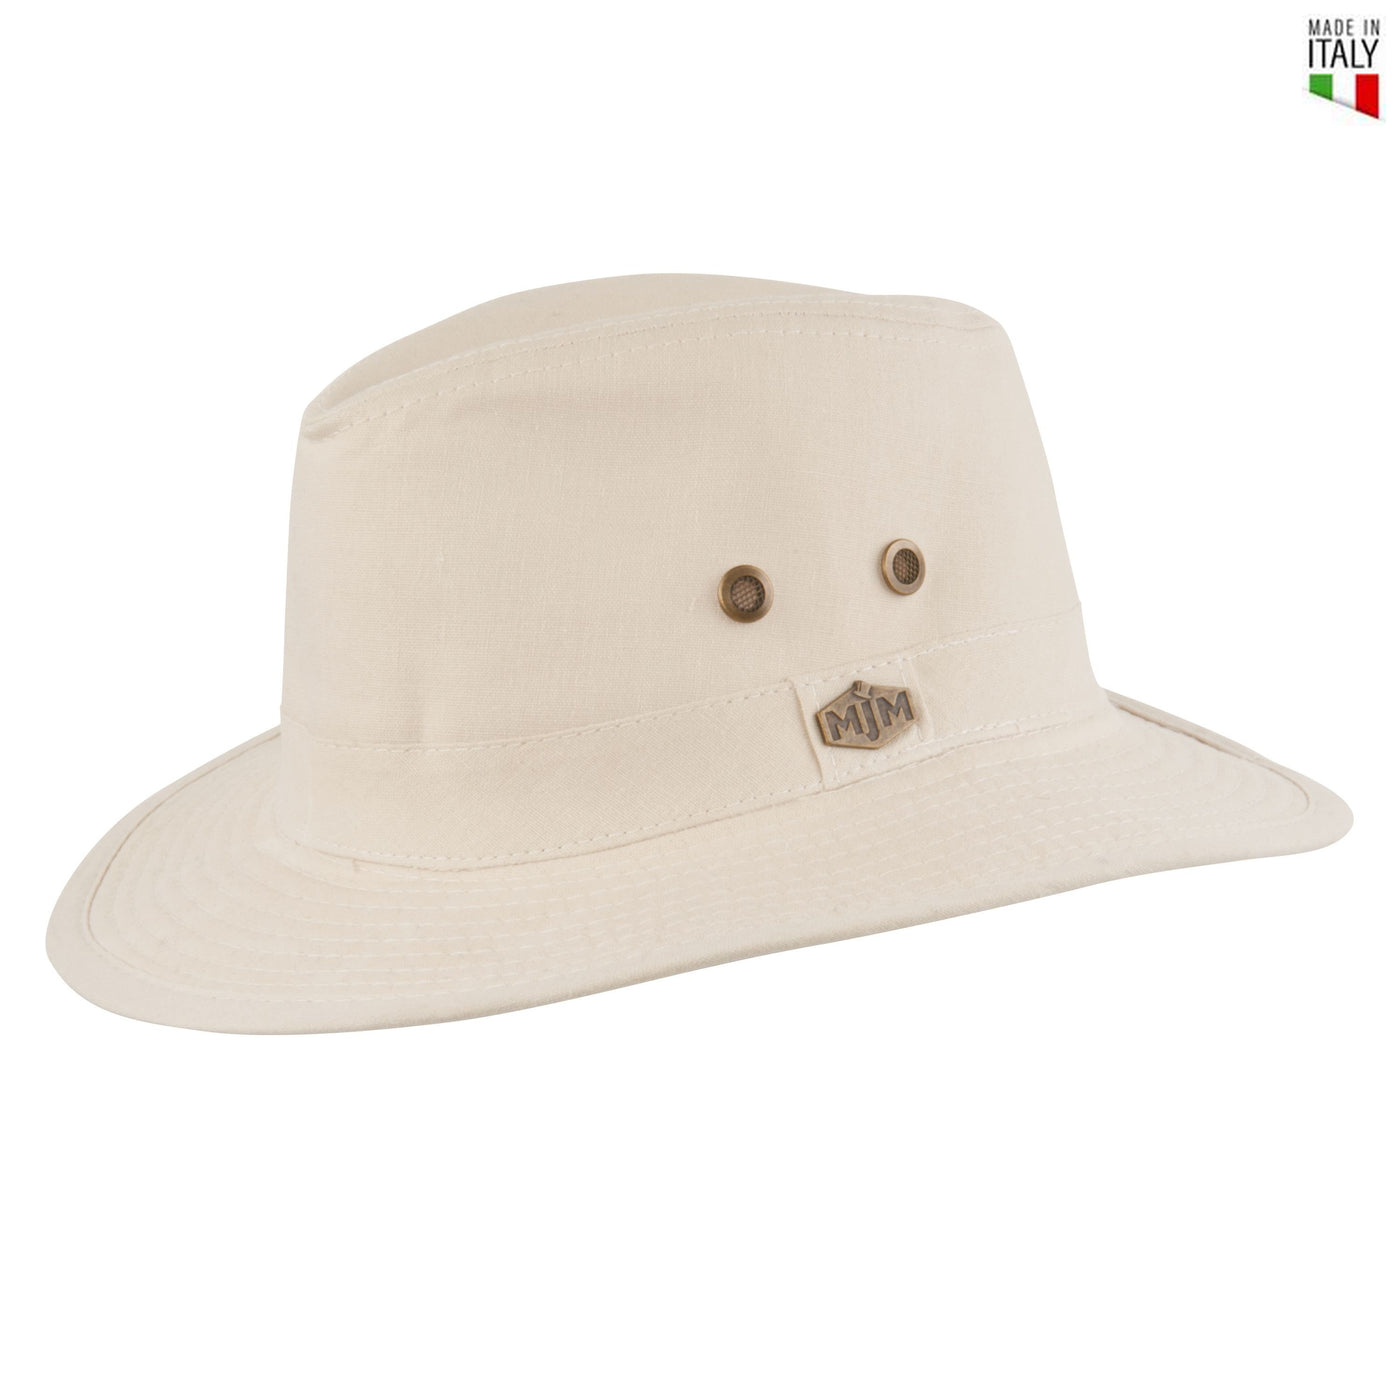 MJM Caribien Linned Safari Hat - Natur - S/56cm - Hat fra MJM Hats hos The Prince Webshop